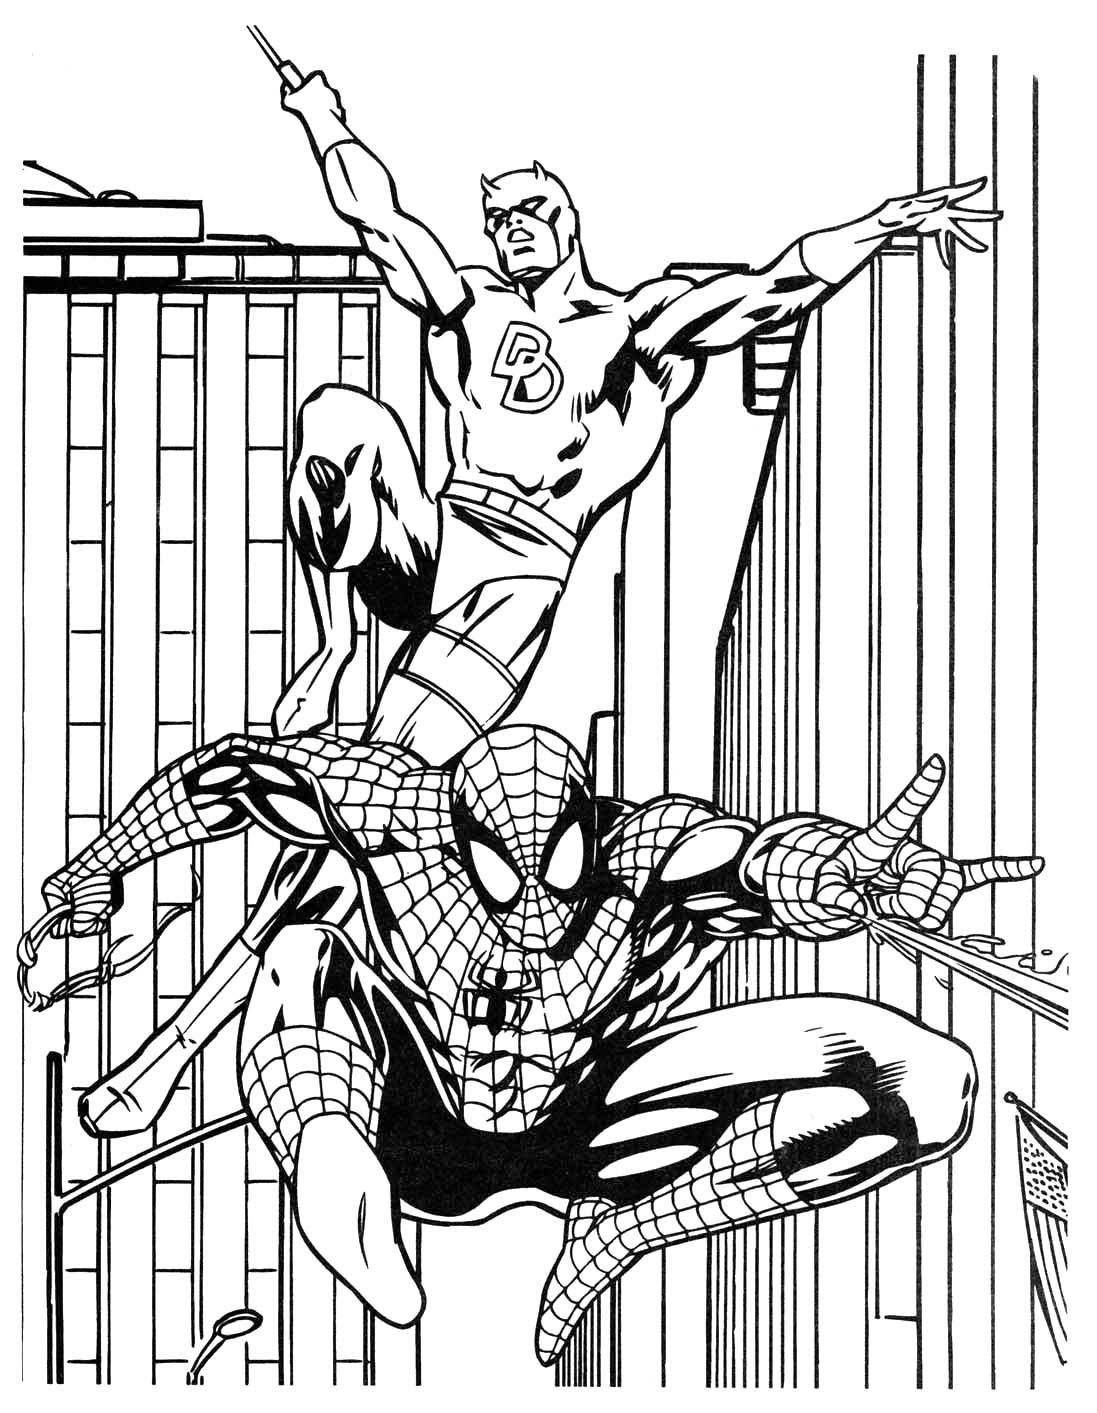 Drawing Marvel Super Heroes #79605 (Superheroes) – Printable coloring pages